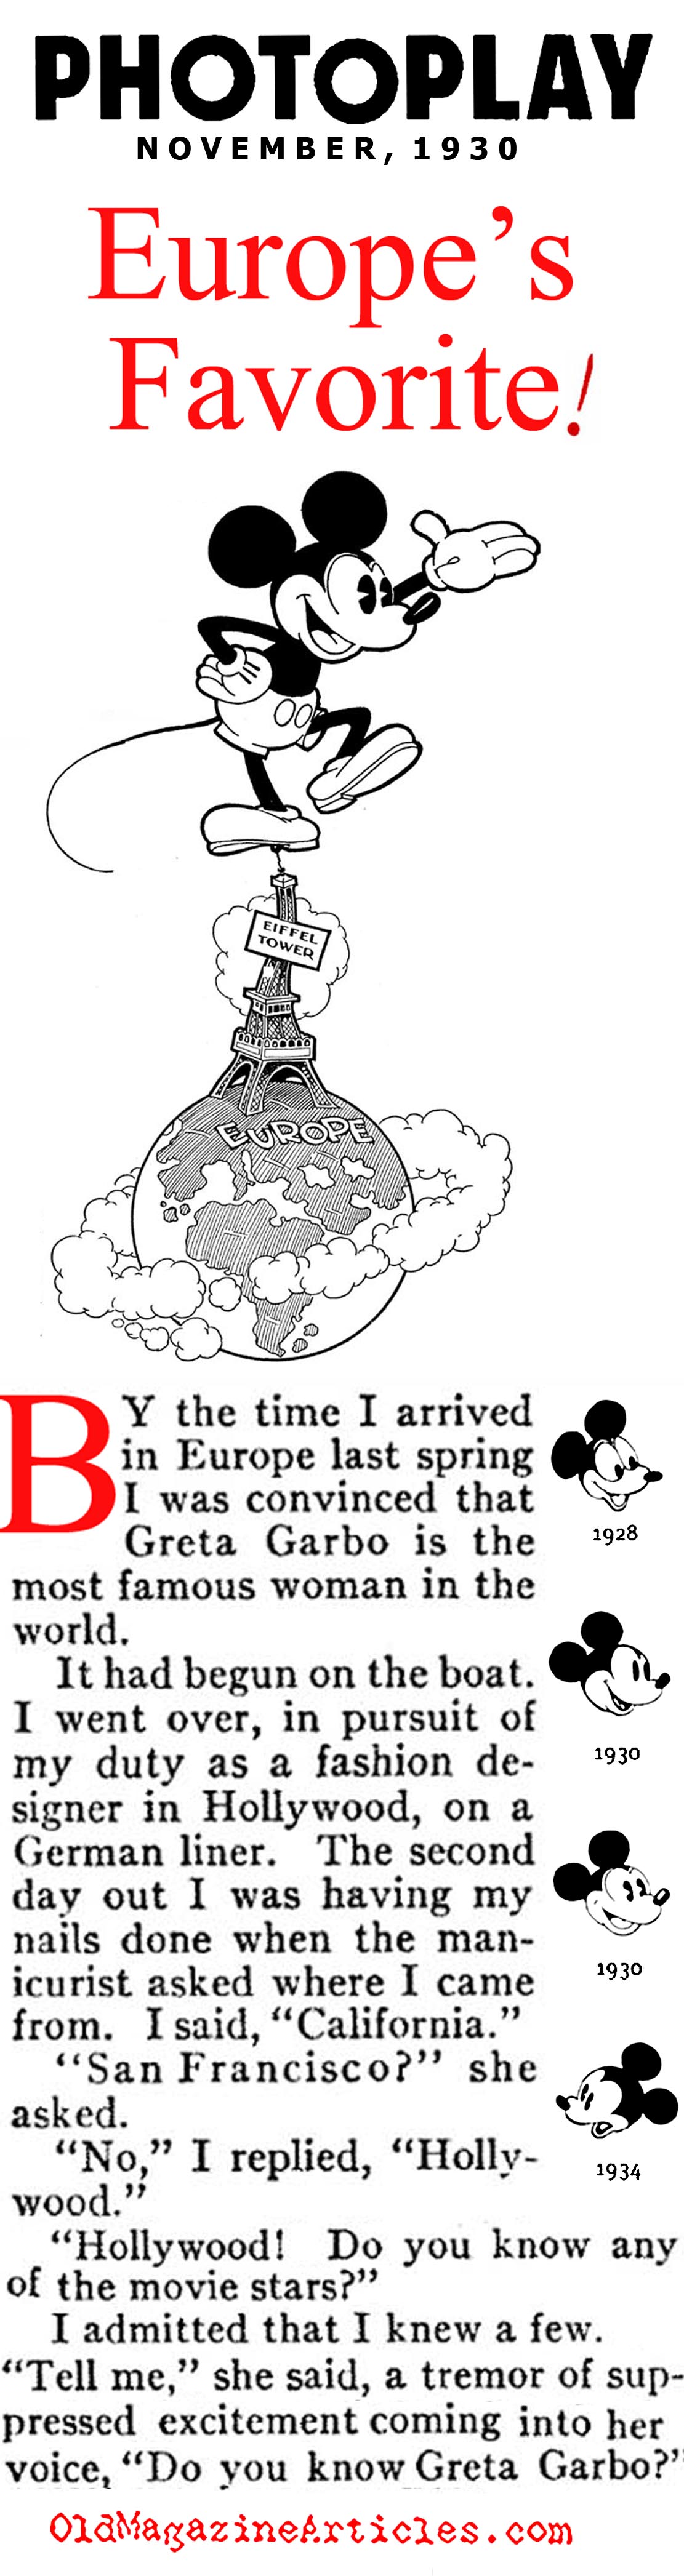 International Movie Star - Mickey Mouse  (Photoplay Magazine, 1930)